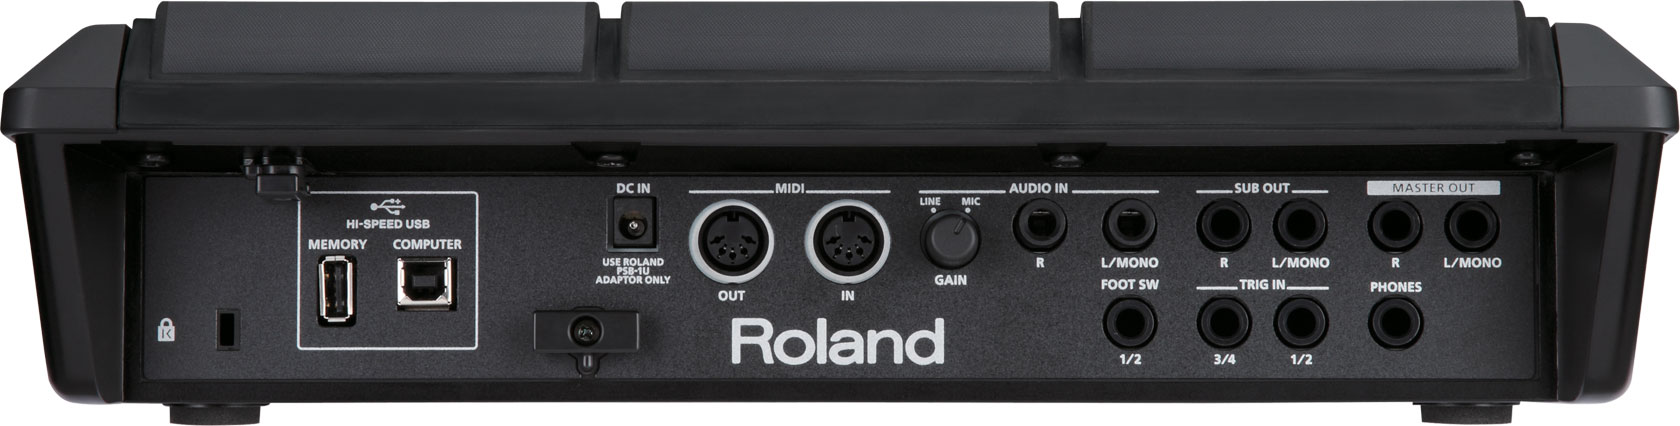 roland spd 30 tone free download